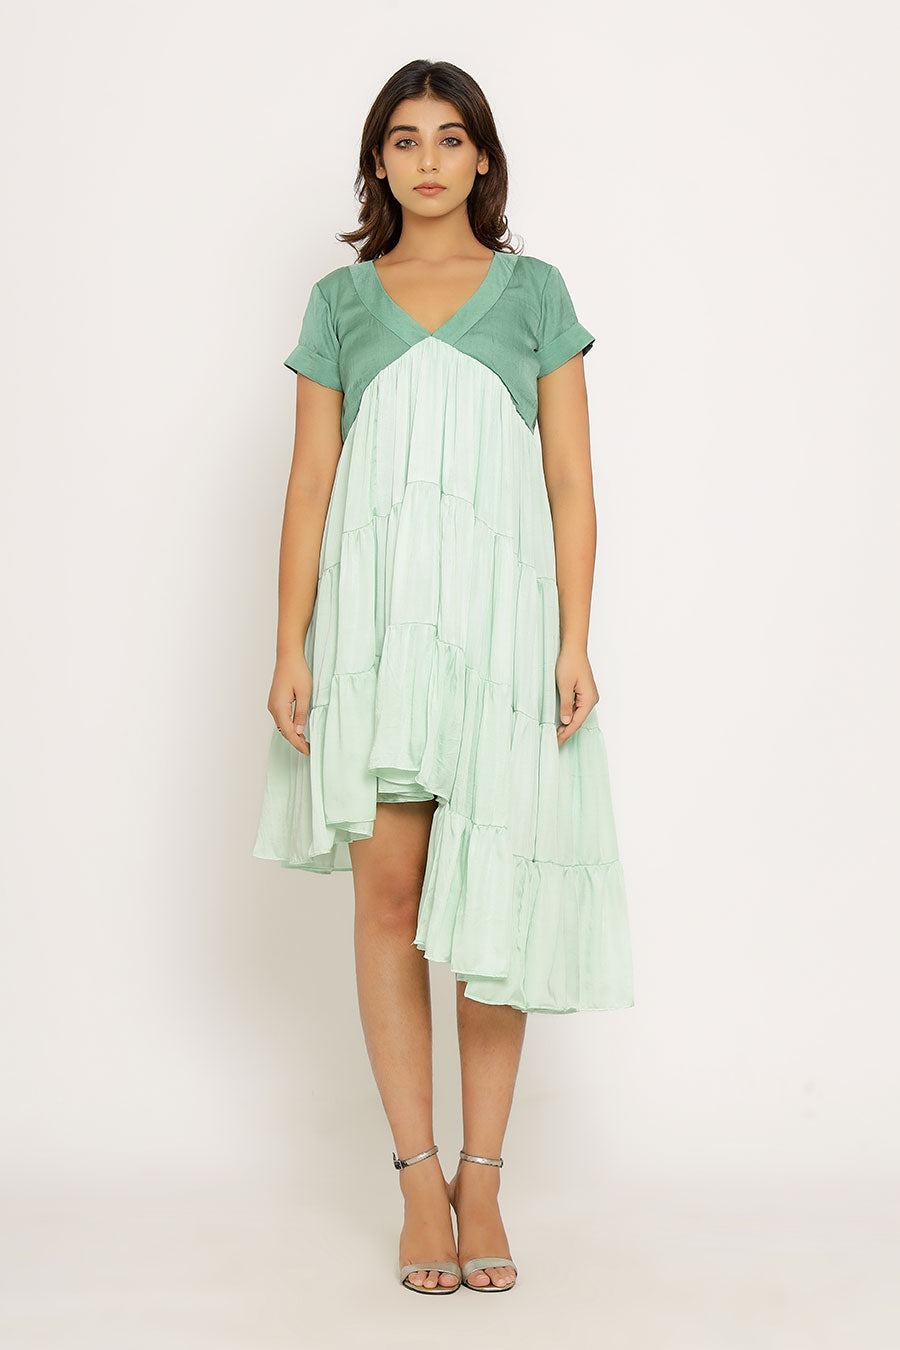 Teal & Tea Green Asymmetrical Dress